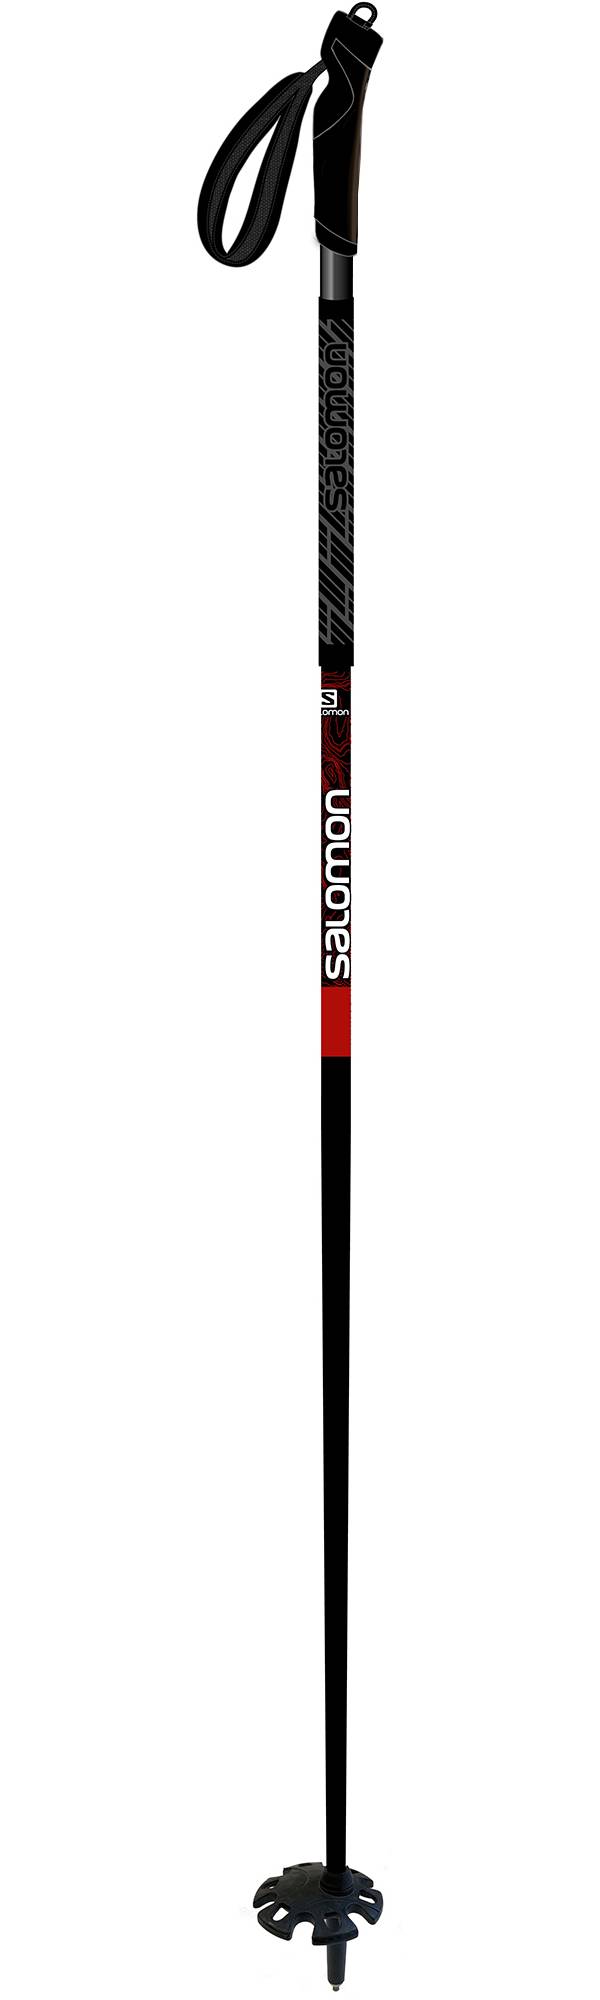 Salomon Escape Outpath Cross Country Ski Poles product image